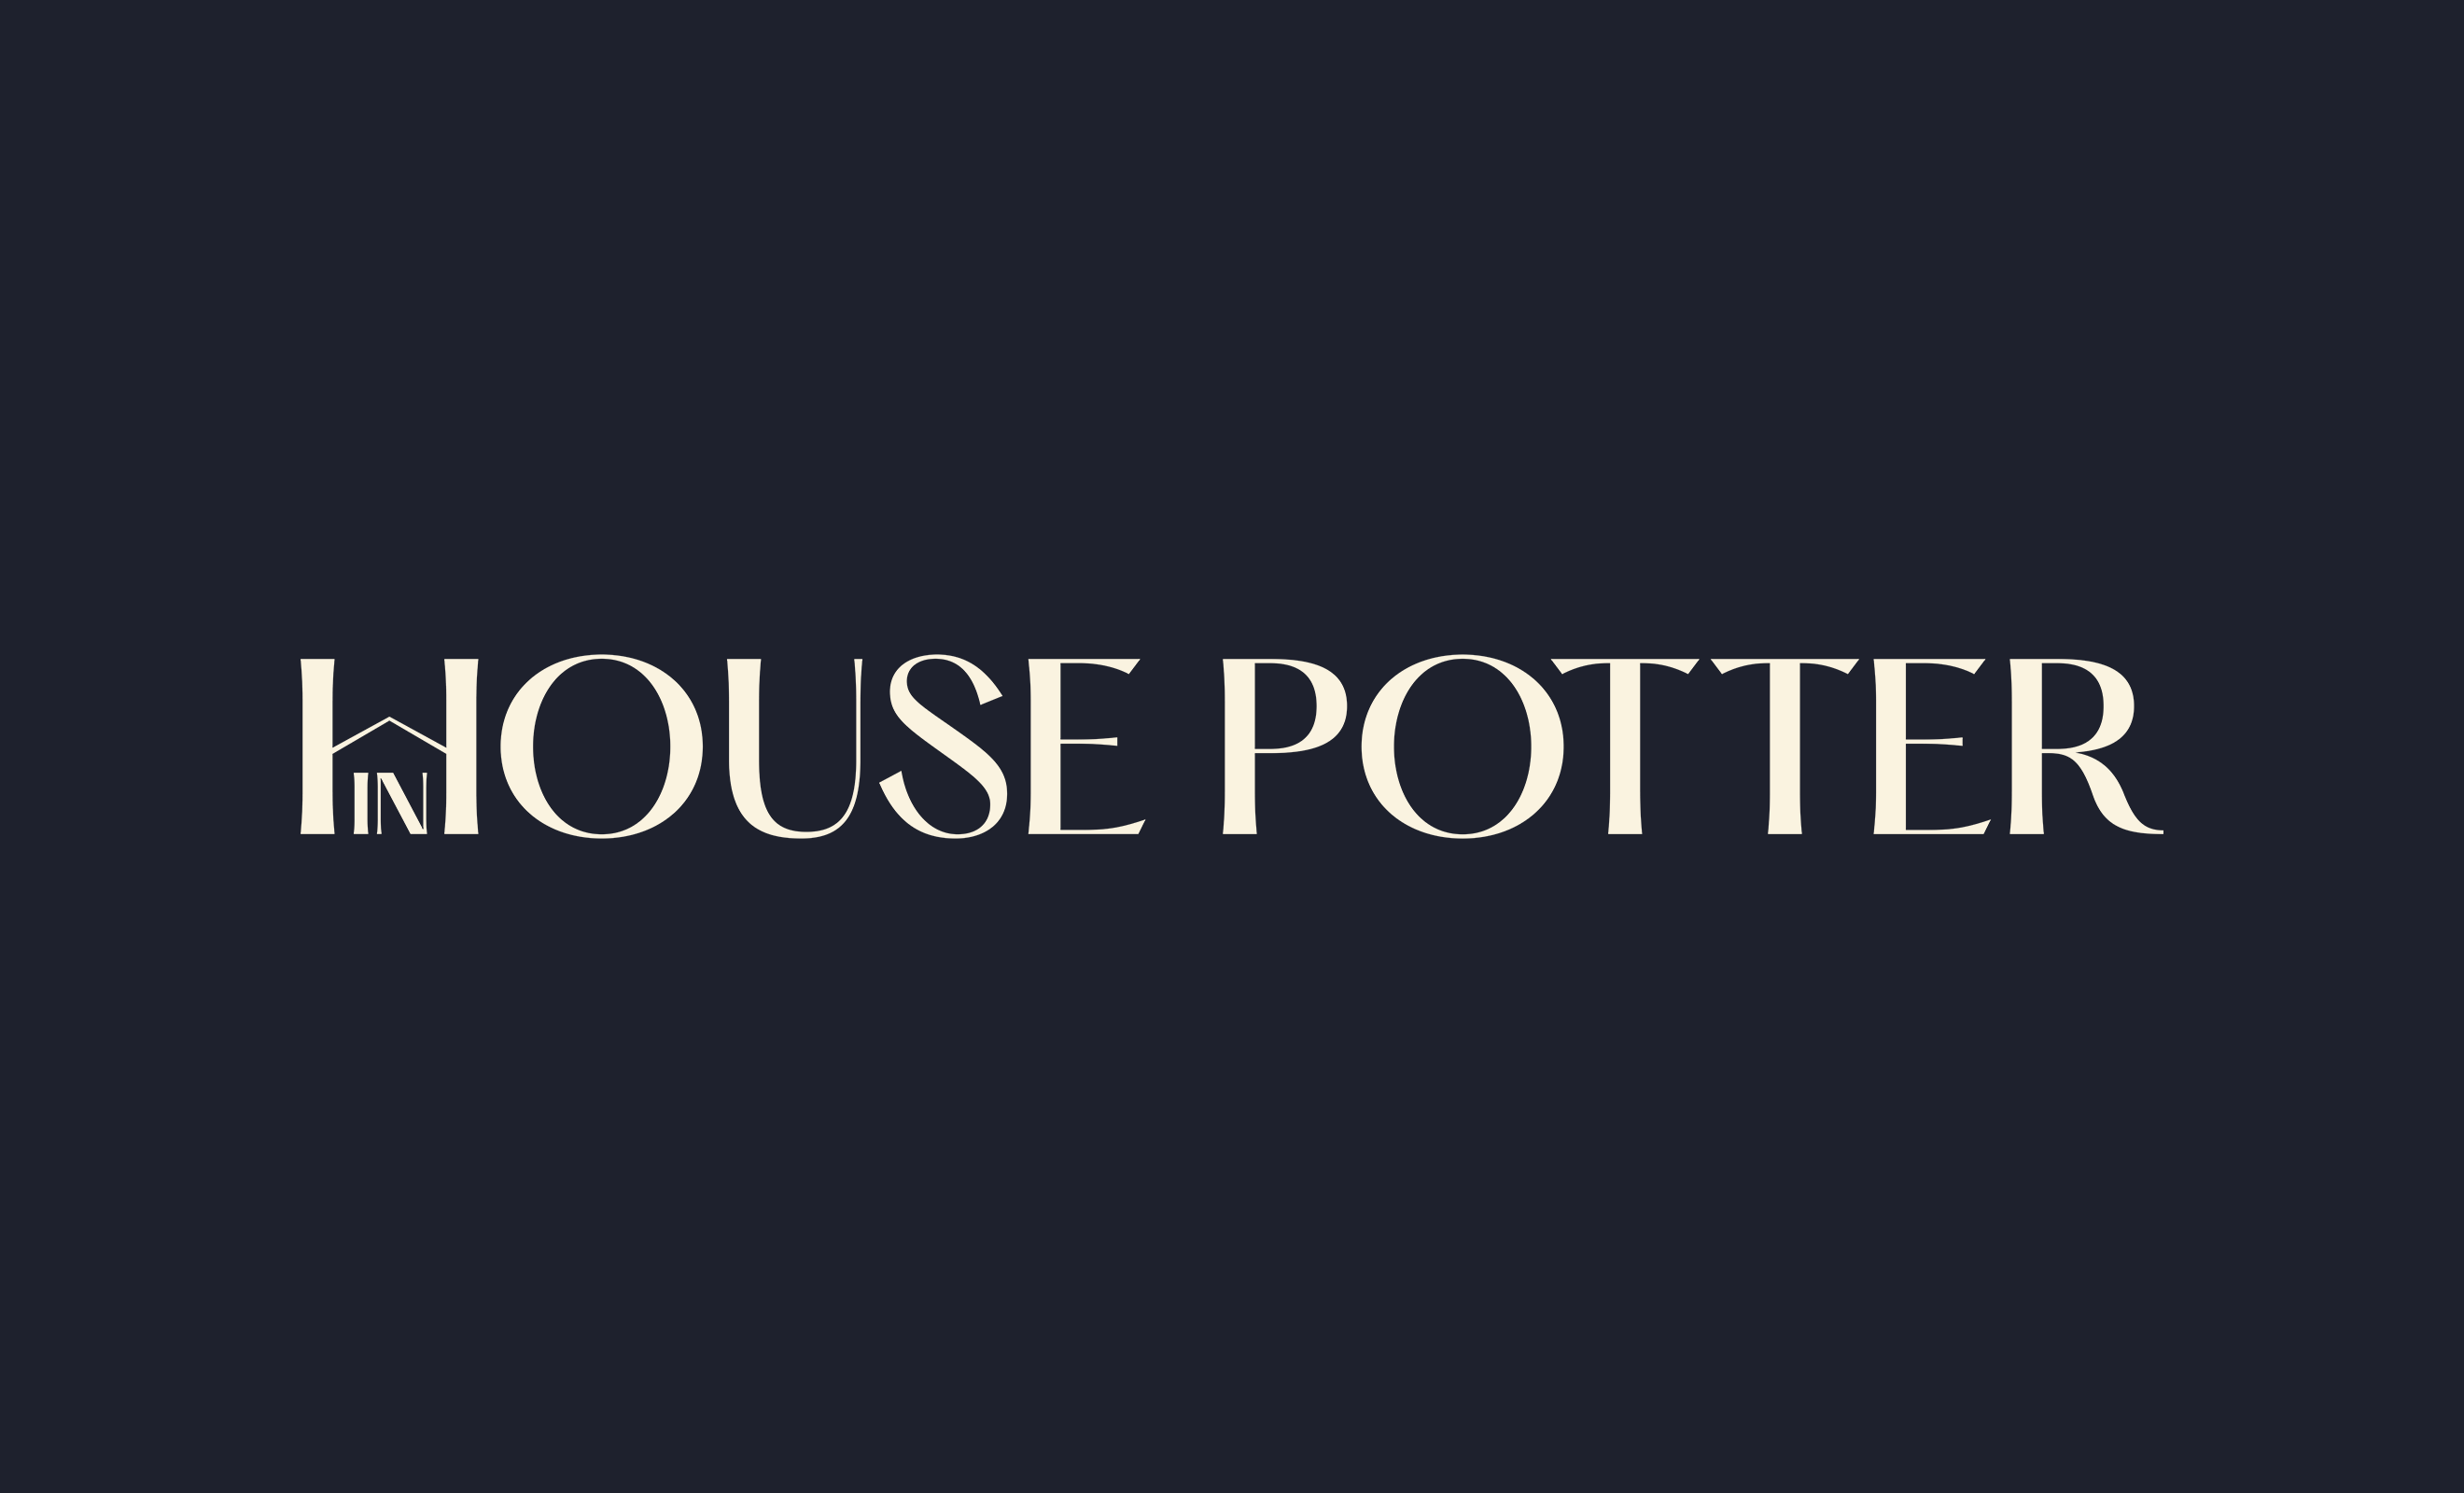 In-House Potter logo